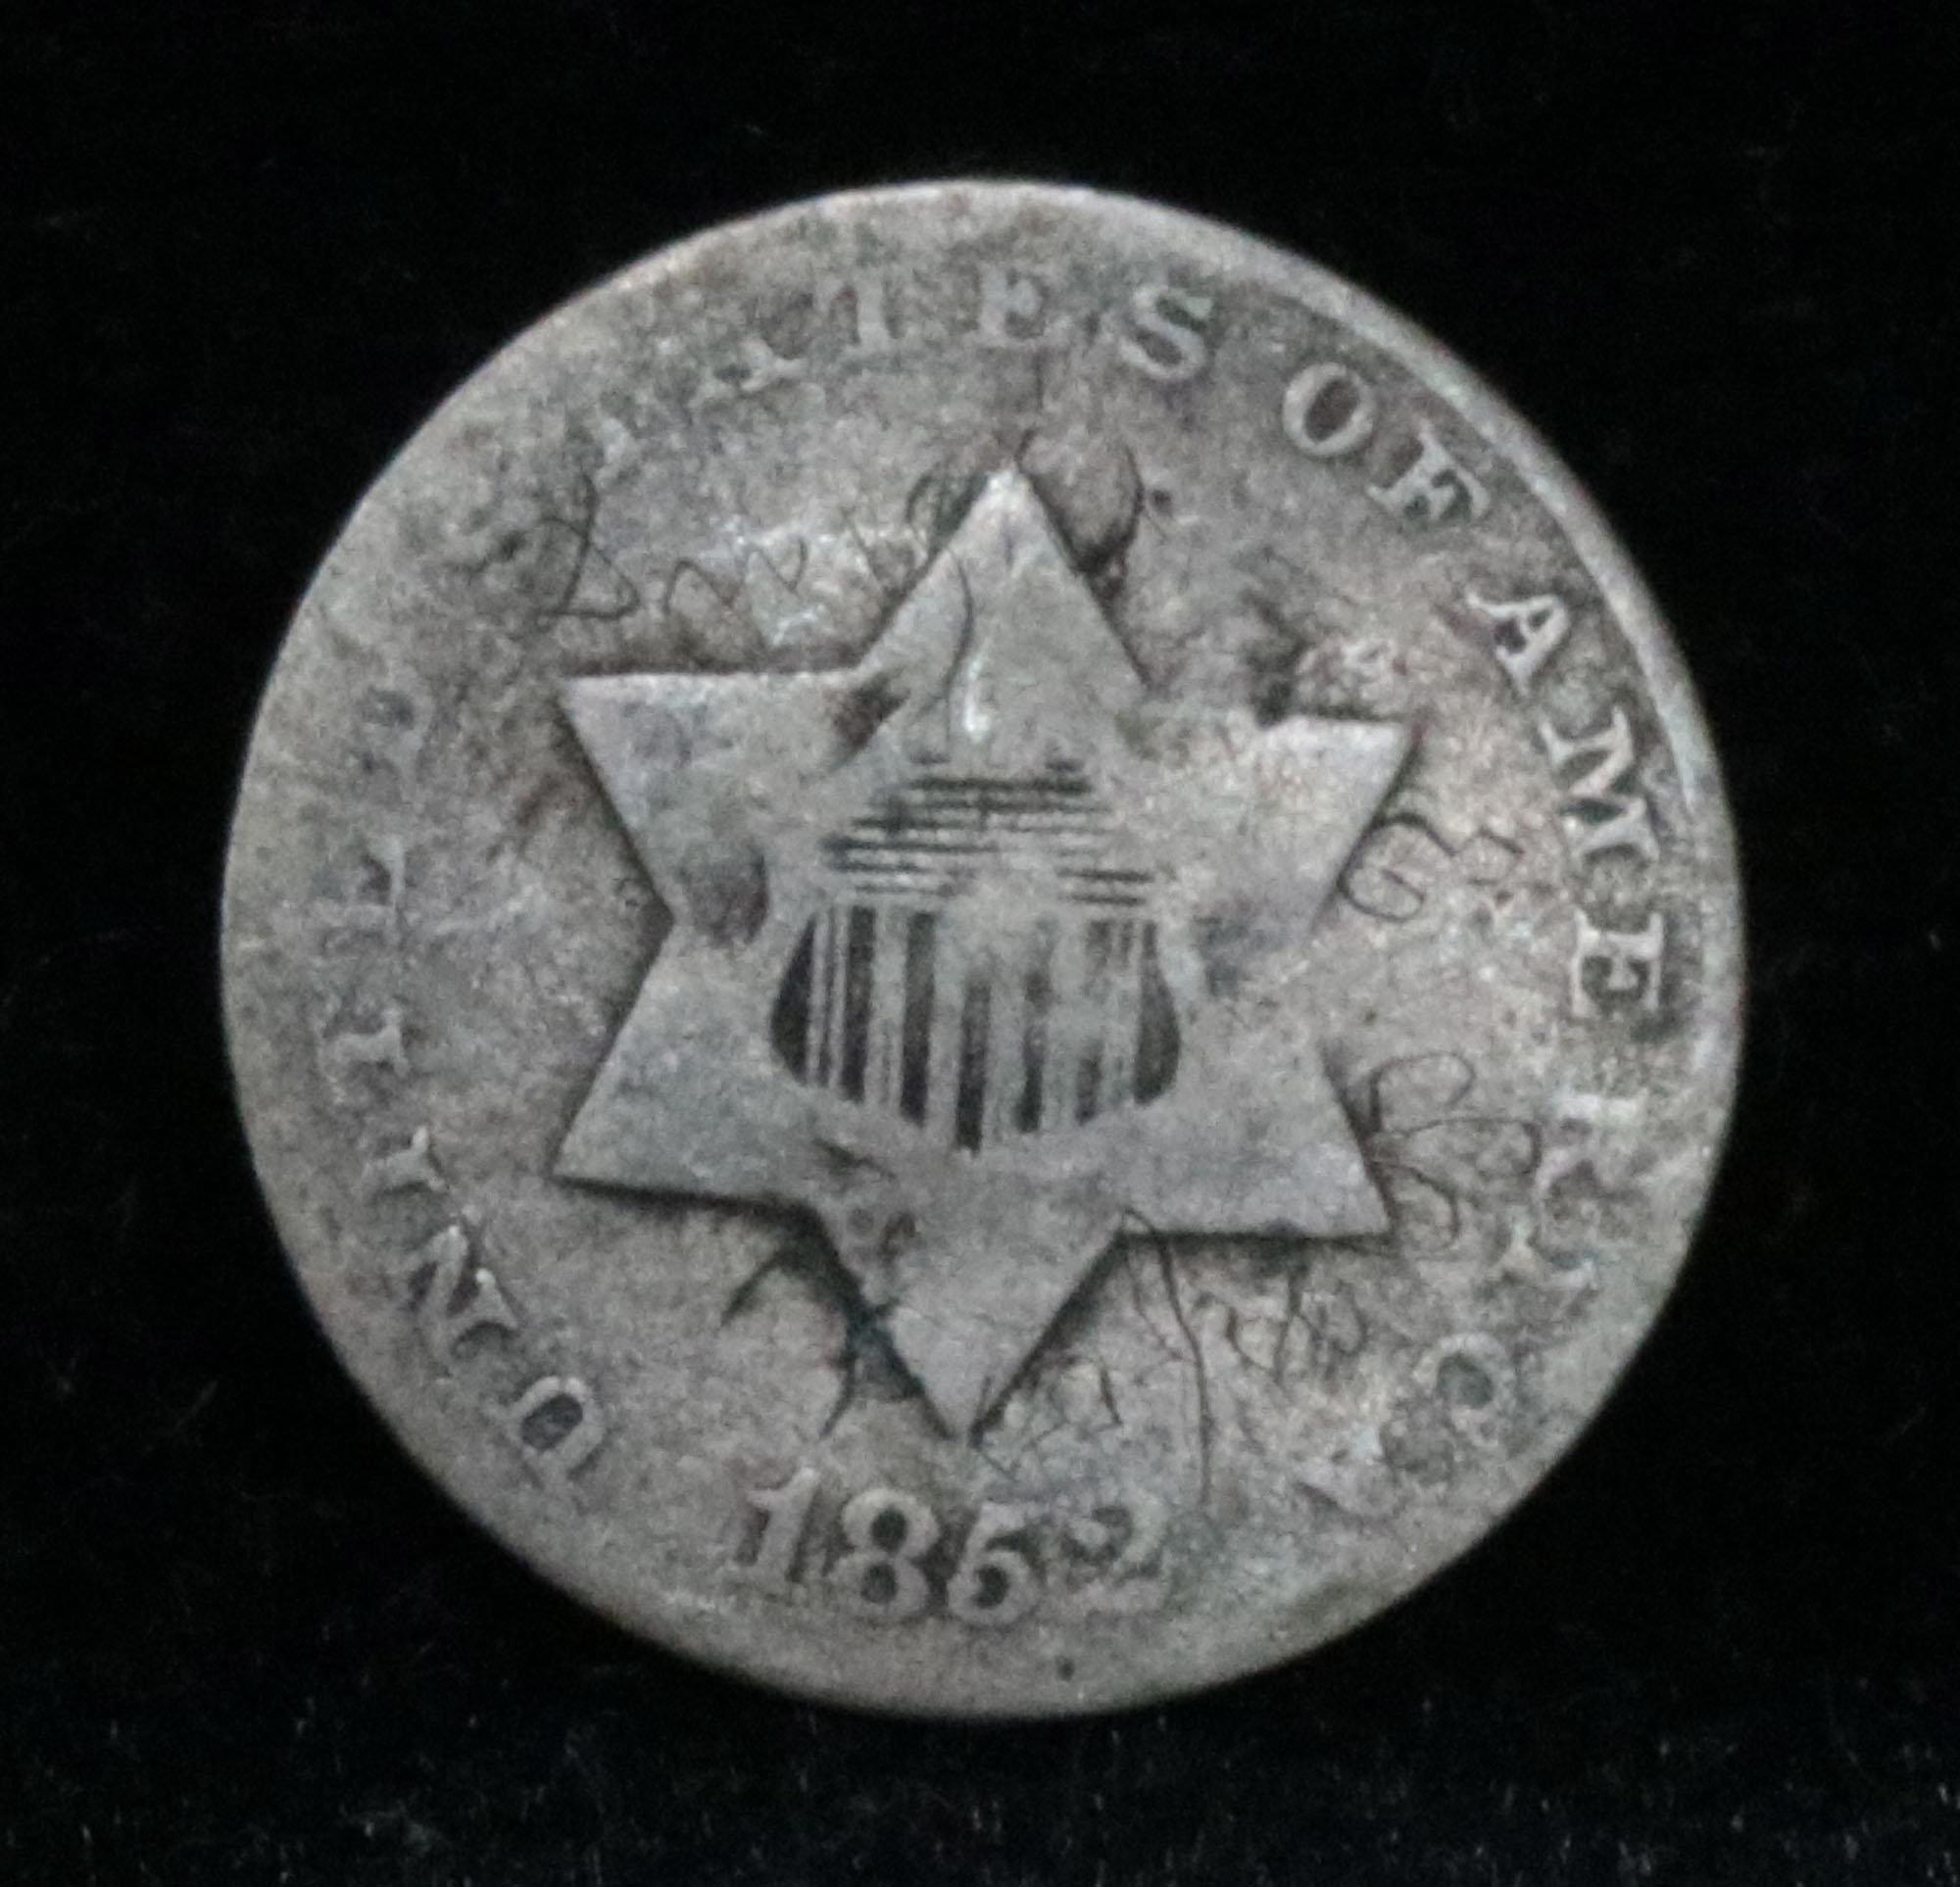 1862 3 Cent Silver 3cs Grades vg+